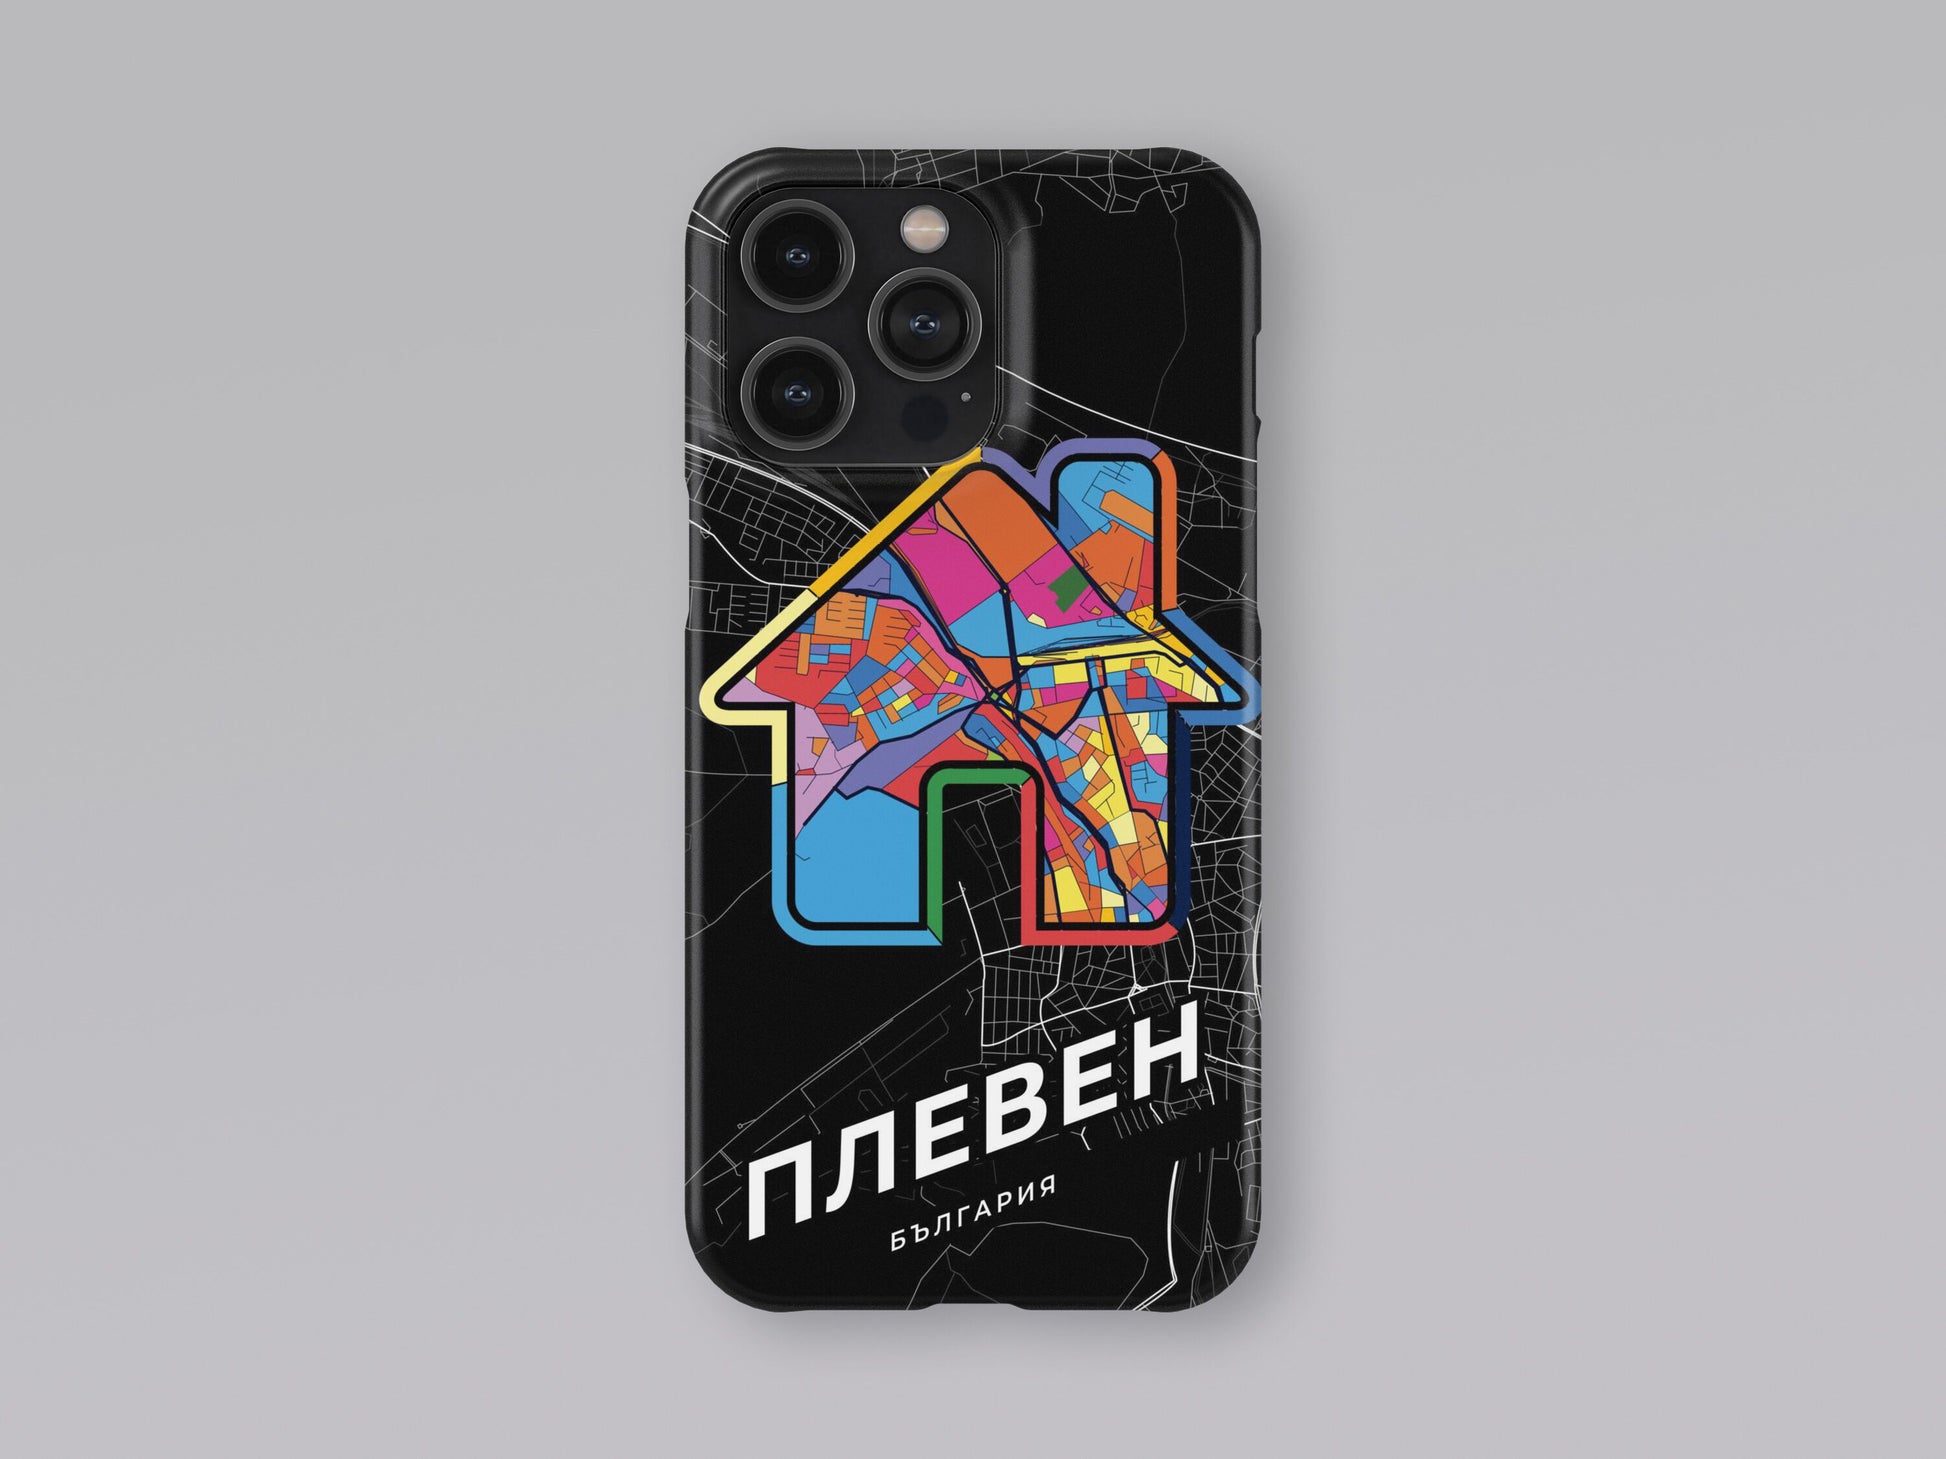 Плевен България slim phone case with colorful icon 3